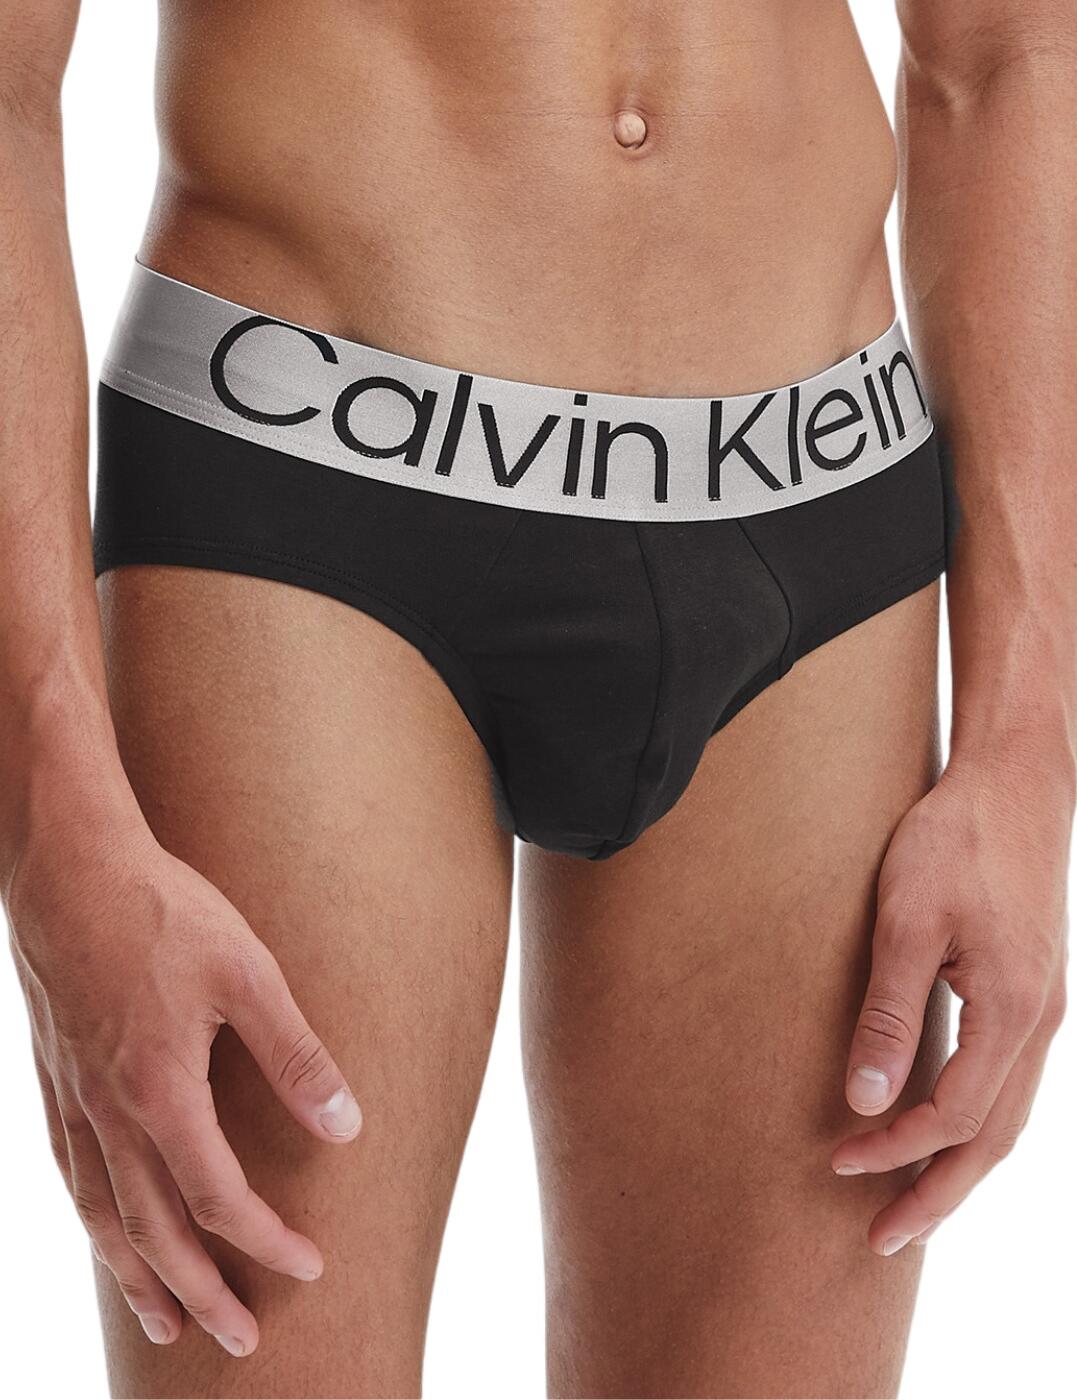 Calvin Klein Mens Steel Cotton Hip Briefs 3 Pack - Belle Lingerie